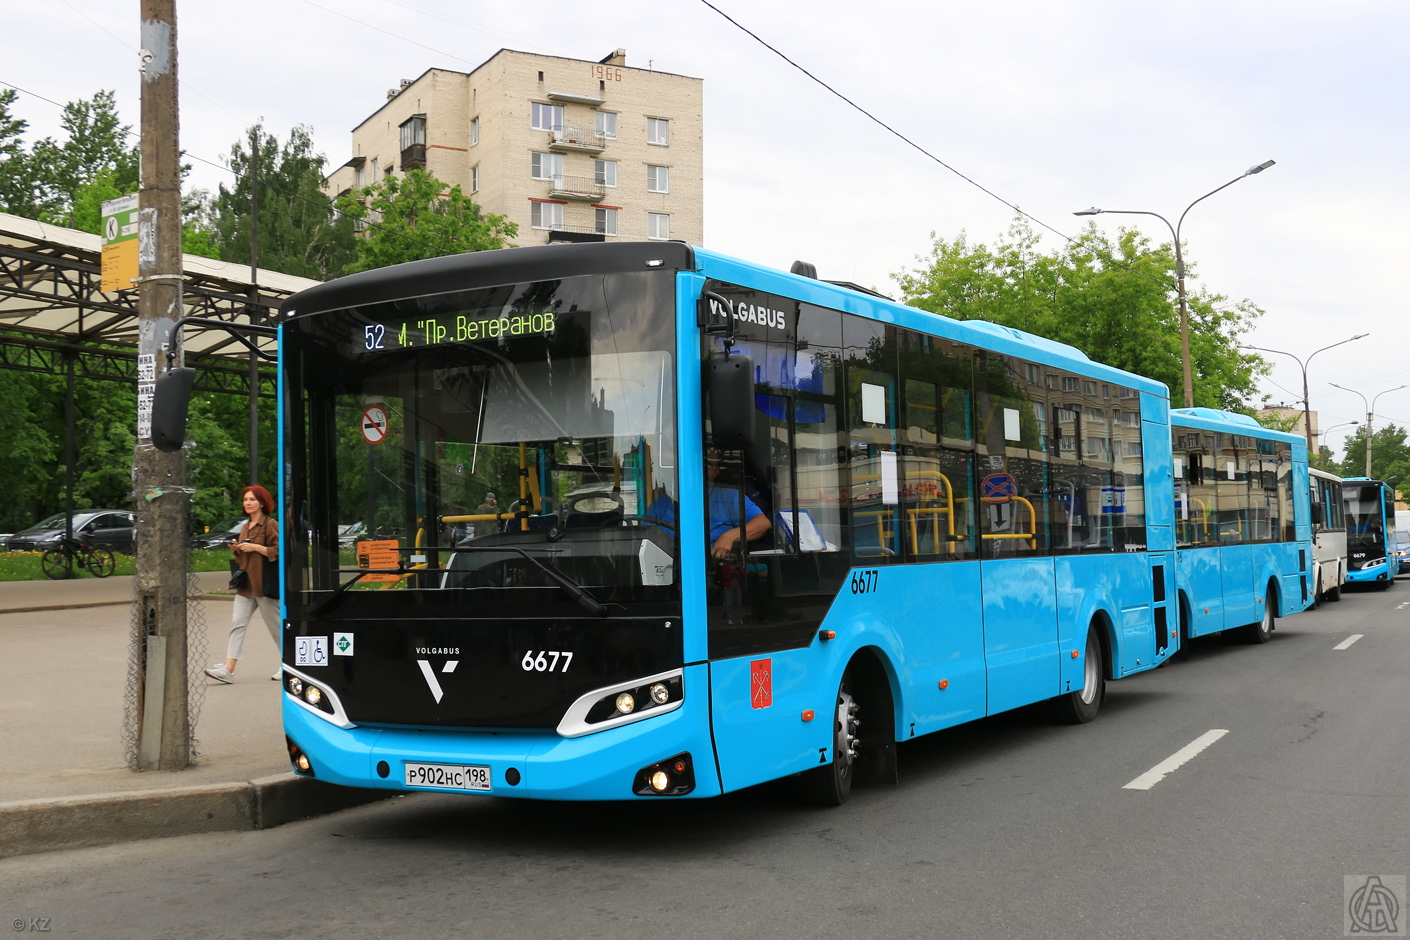 Sankt Petersburg, Volgabus-4298.G4 (LNG) Nr. 6677